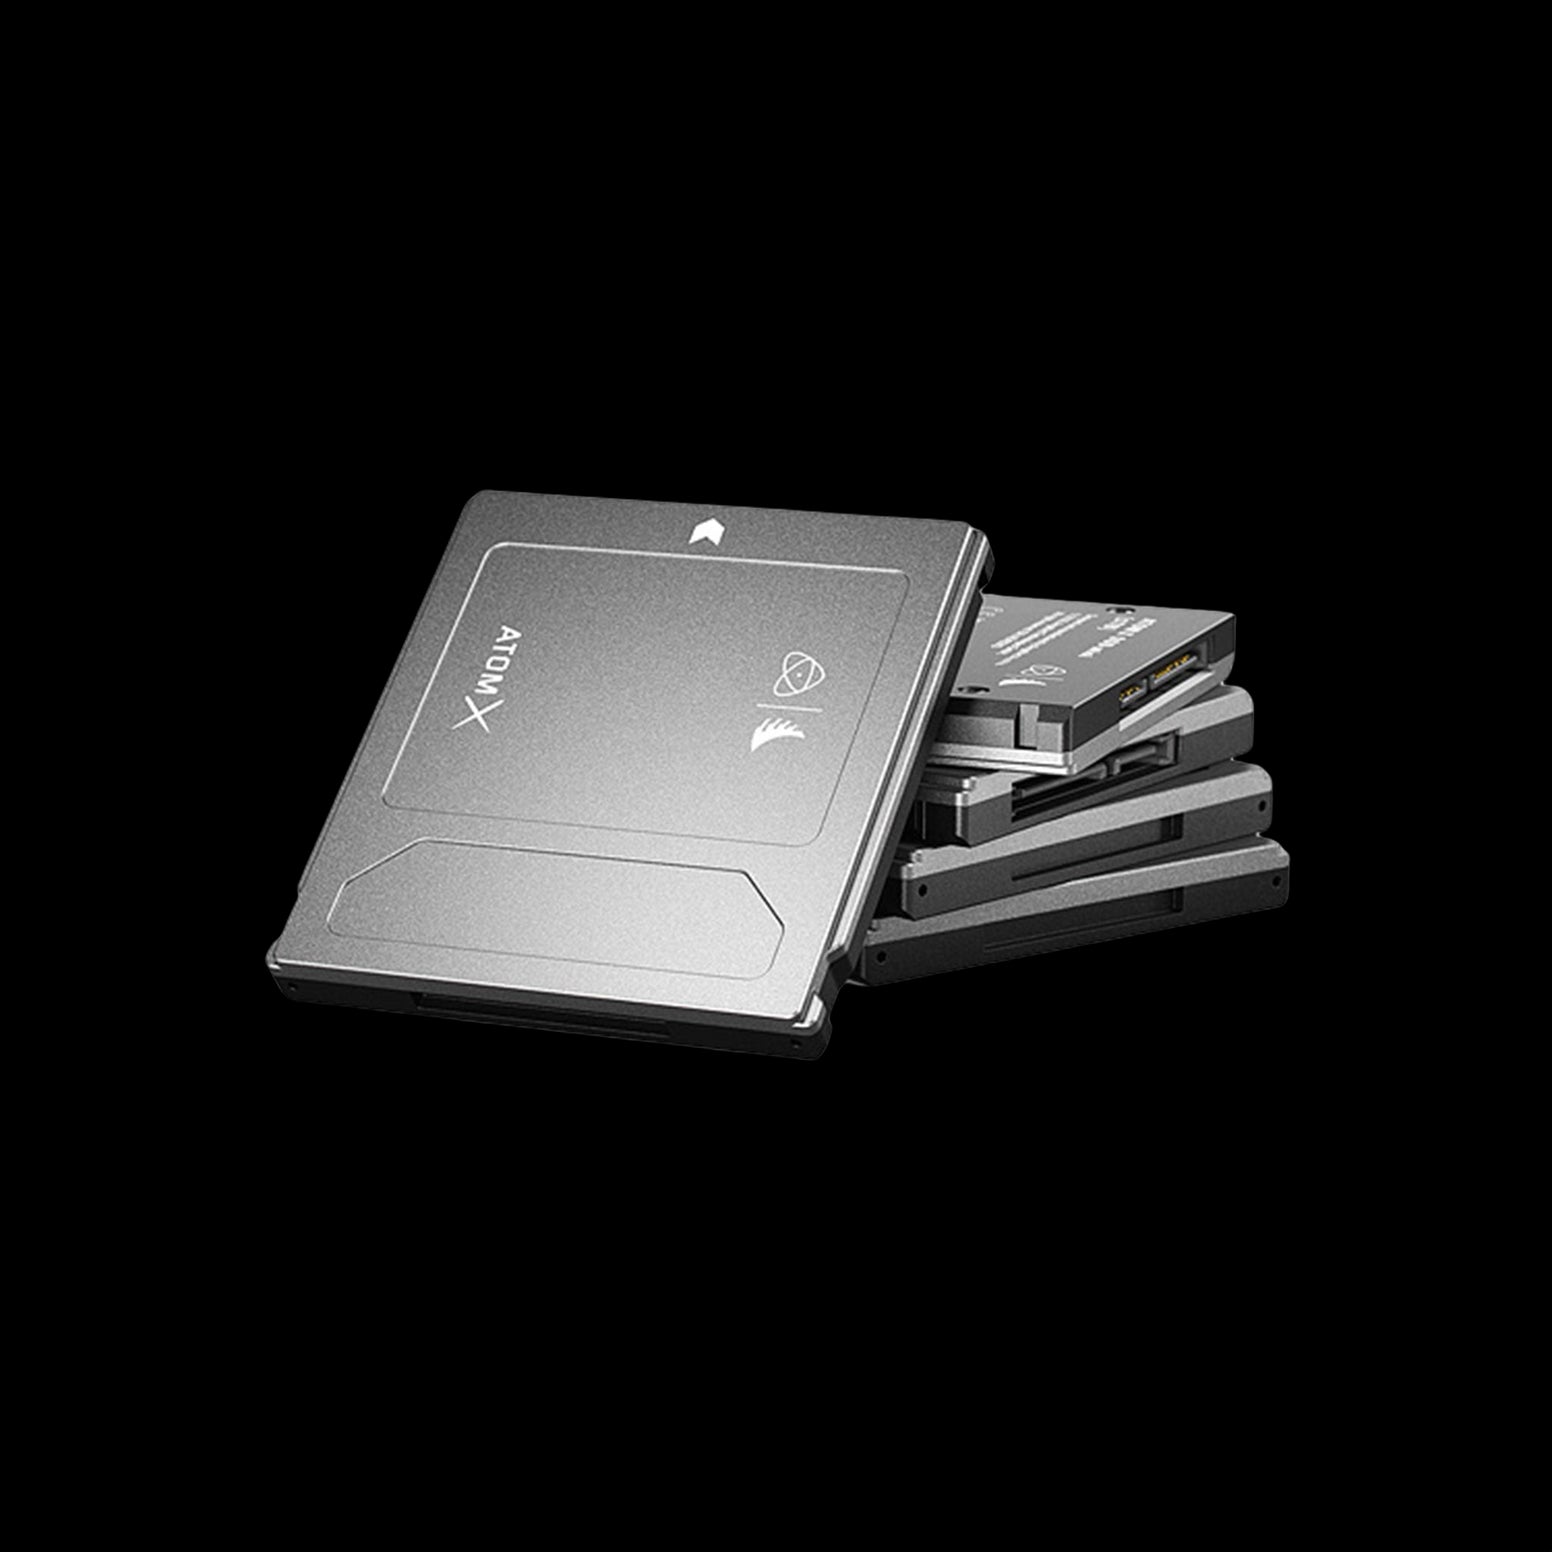 Angelbird 500GB AtomX External SSD mini for Atomos - Discontinued